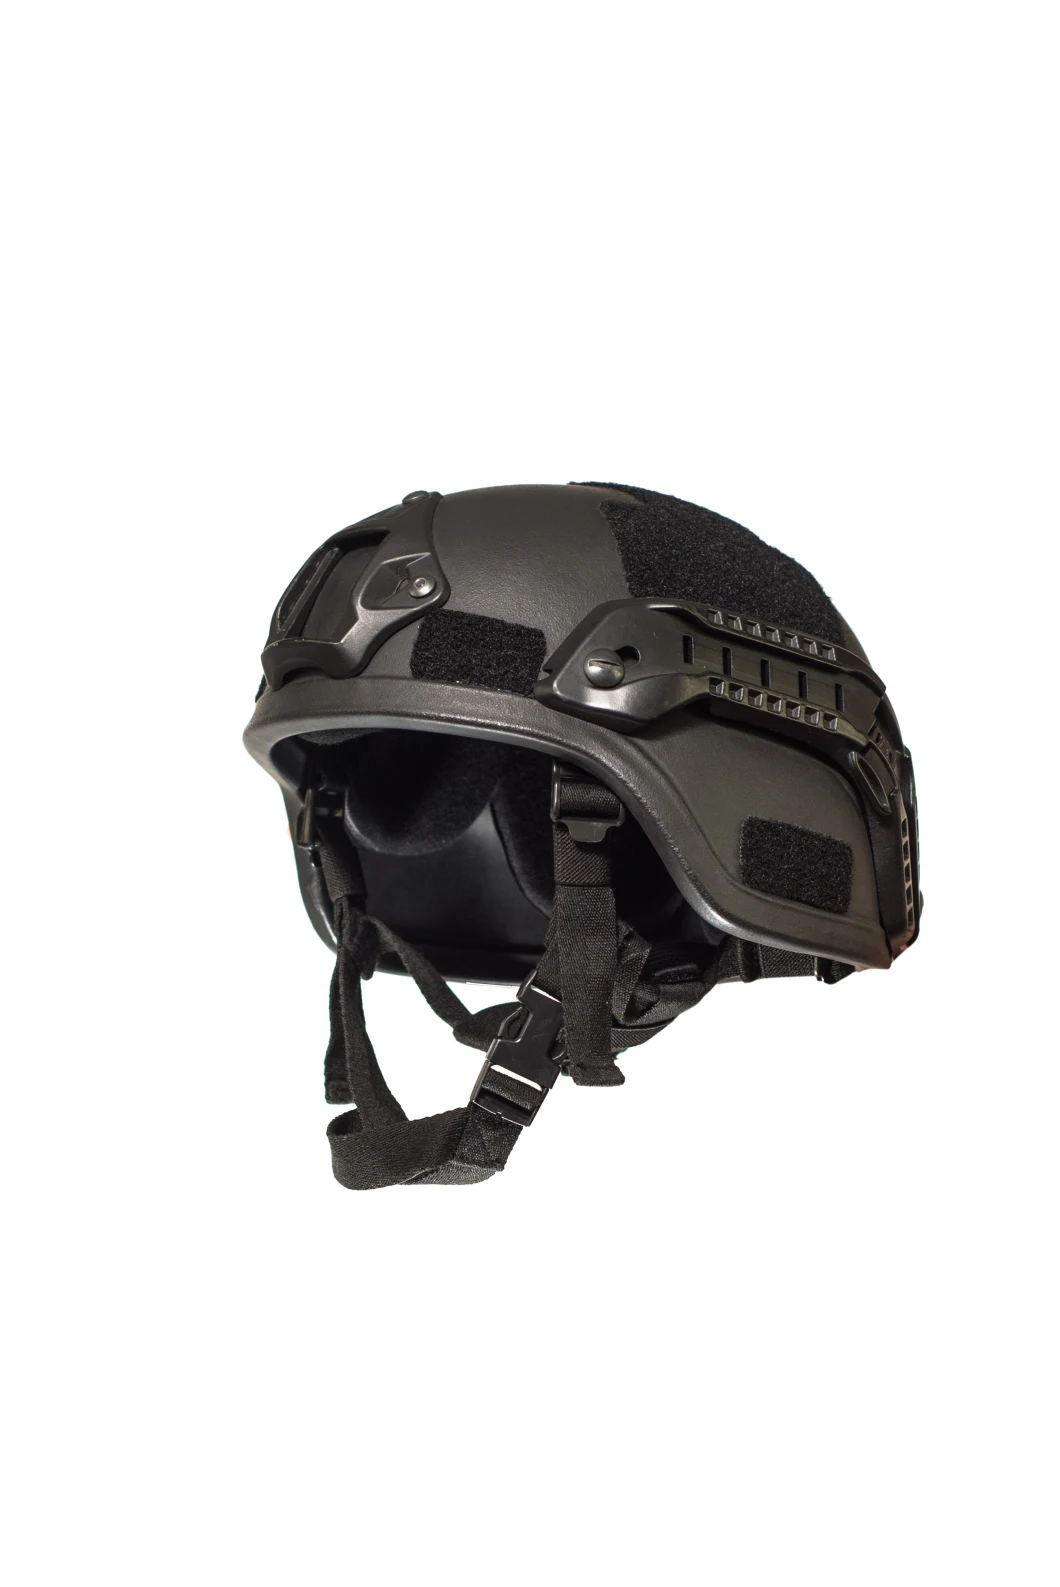 Military Combat Force Defense Army Bulletproof Armor Mich Ballistic Helmet